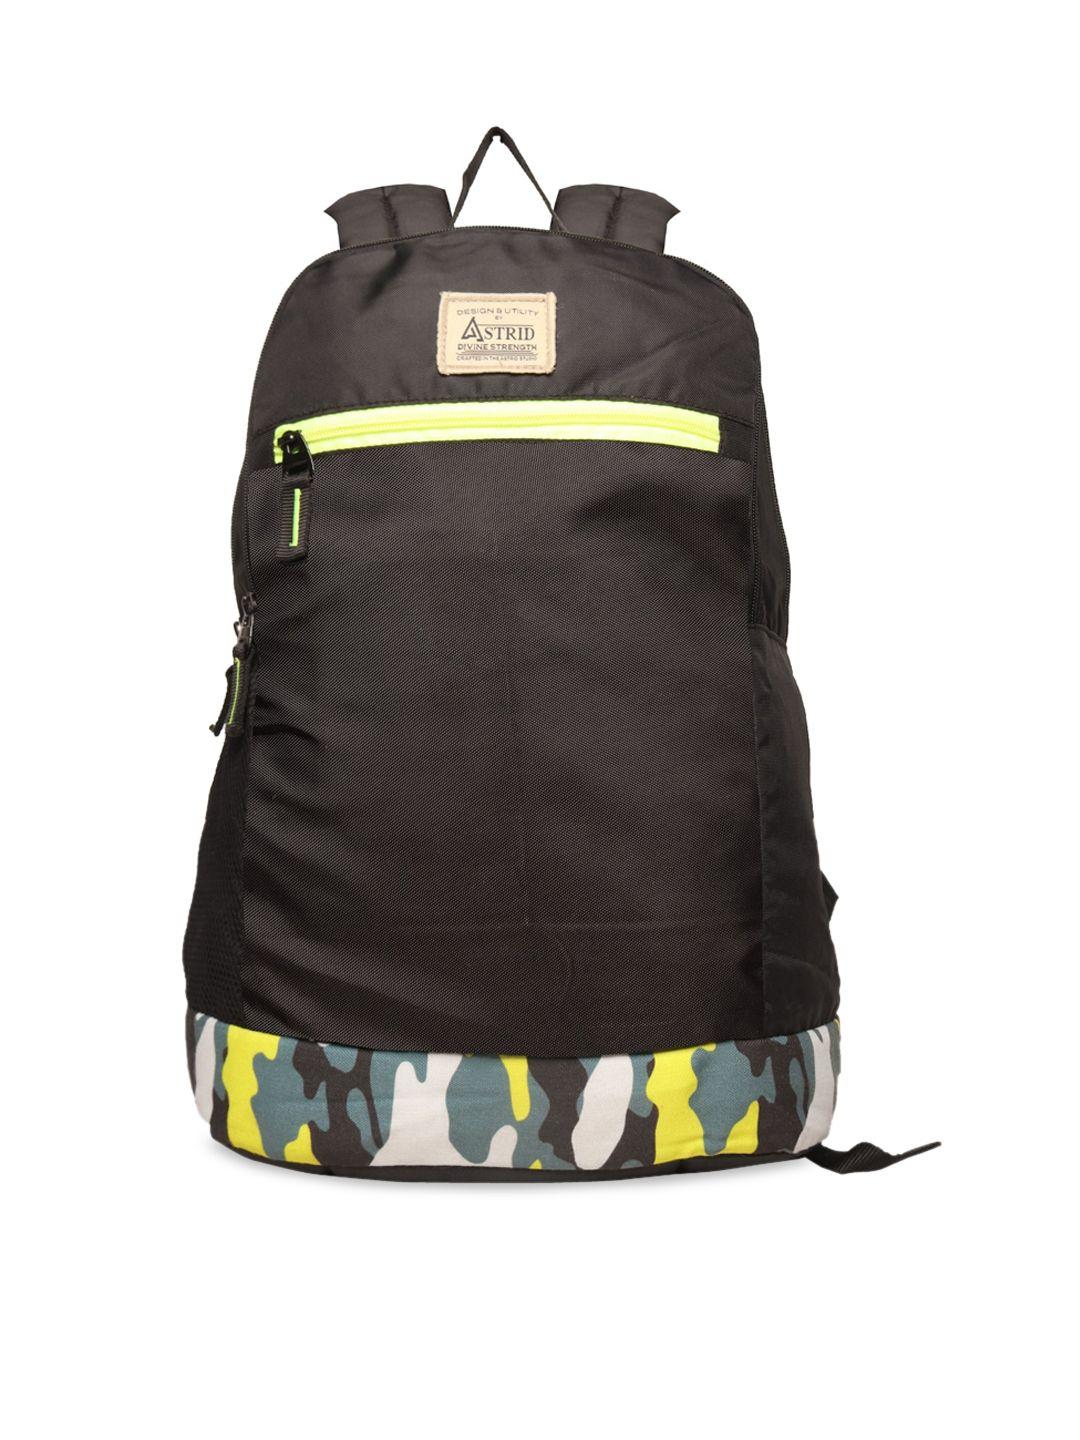 astrid men black & white solid backpack